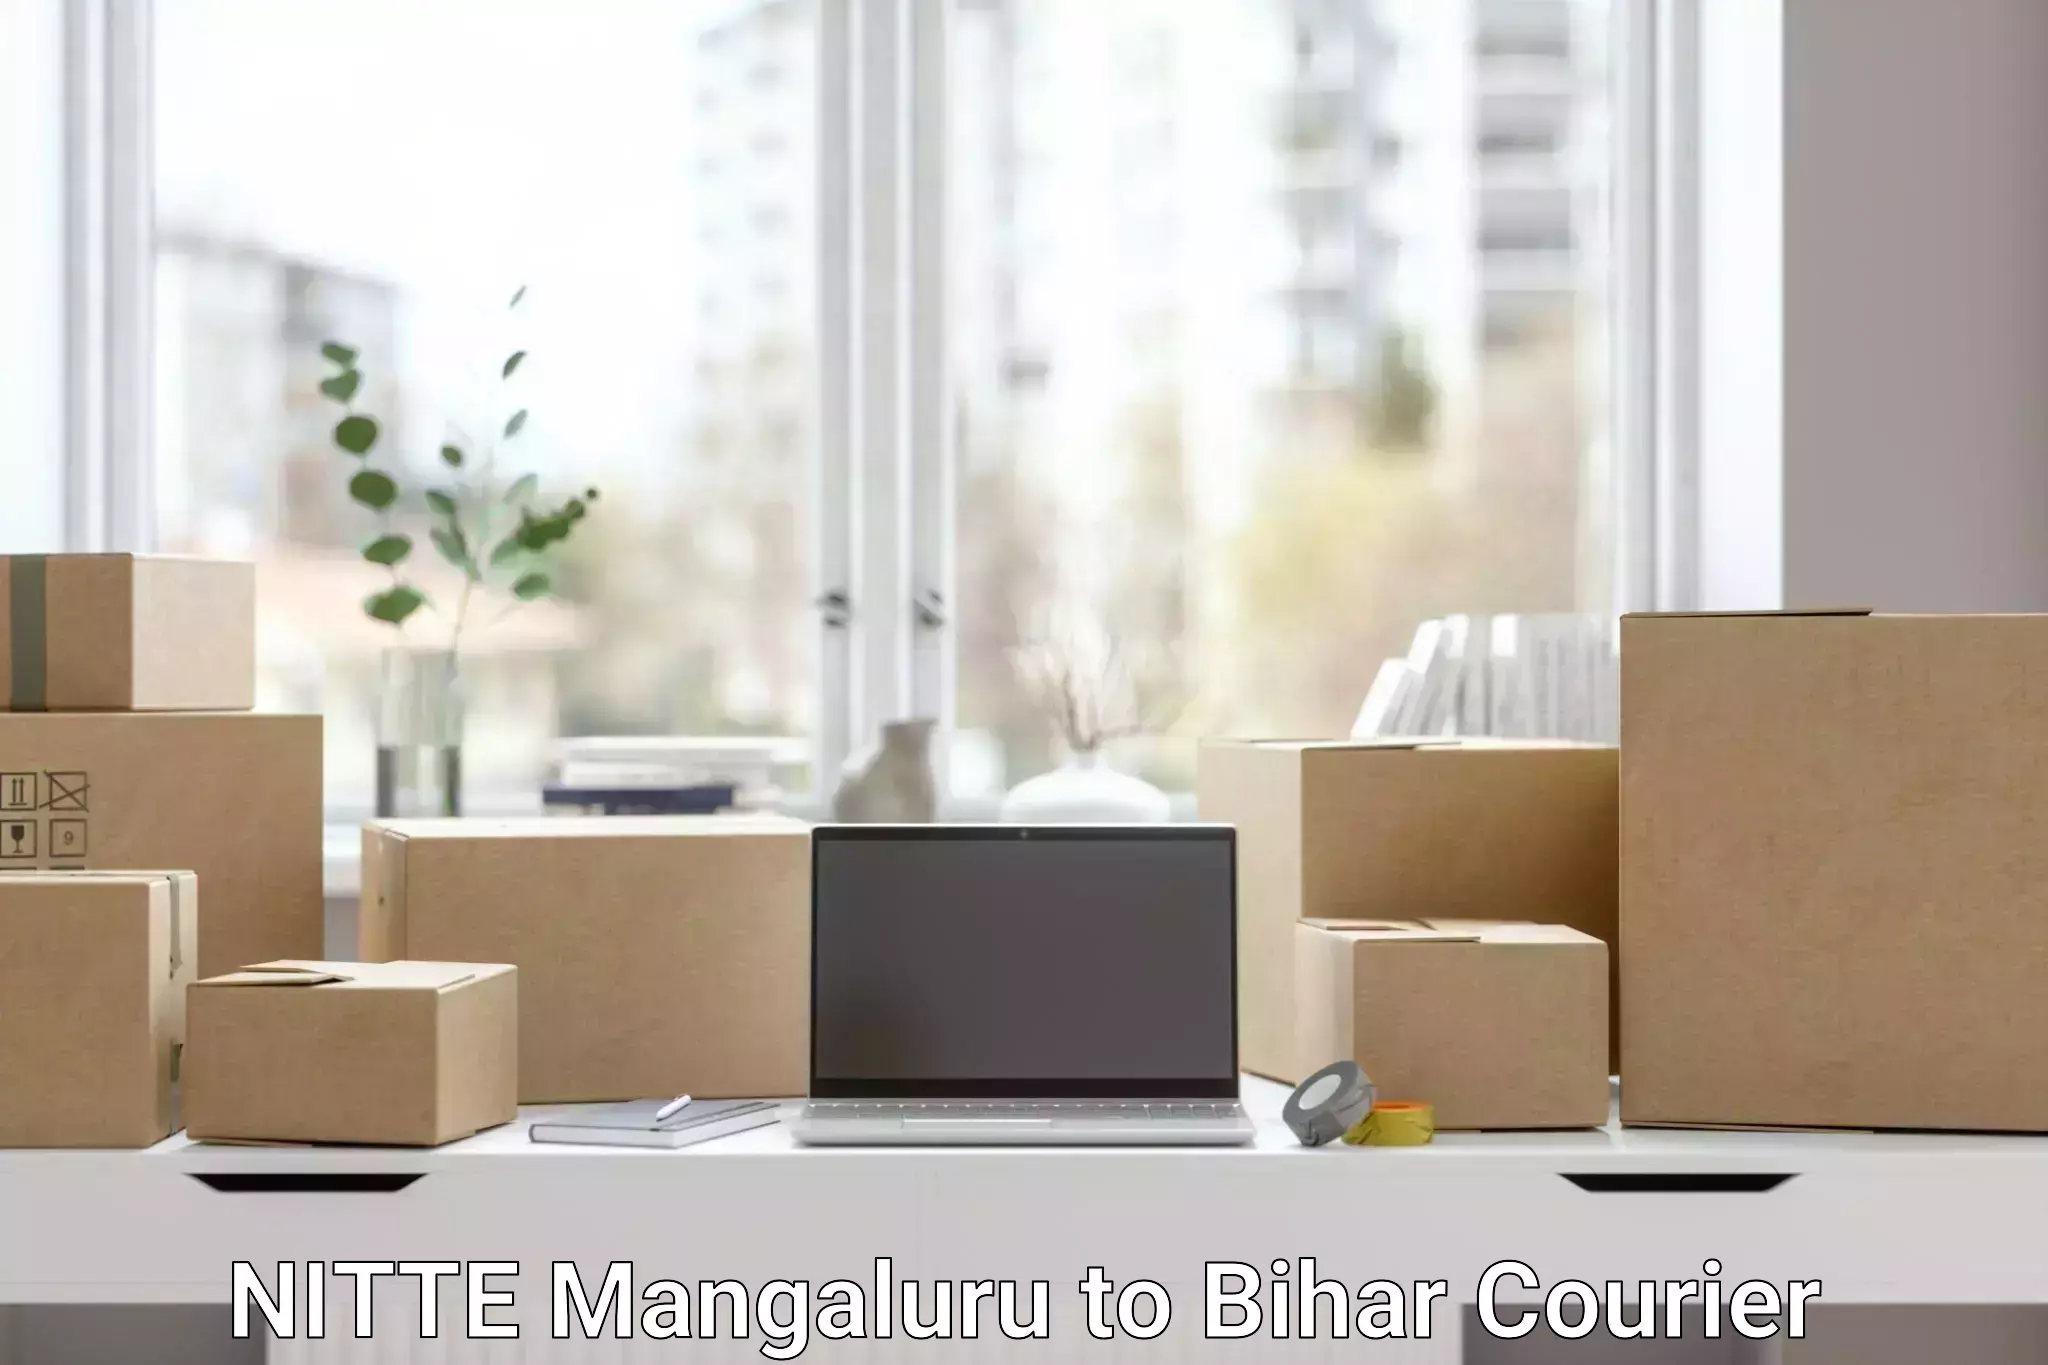 State-of-the-art courier technology NITTE Mangaluru to Jiwdhara